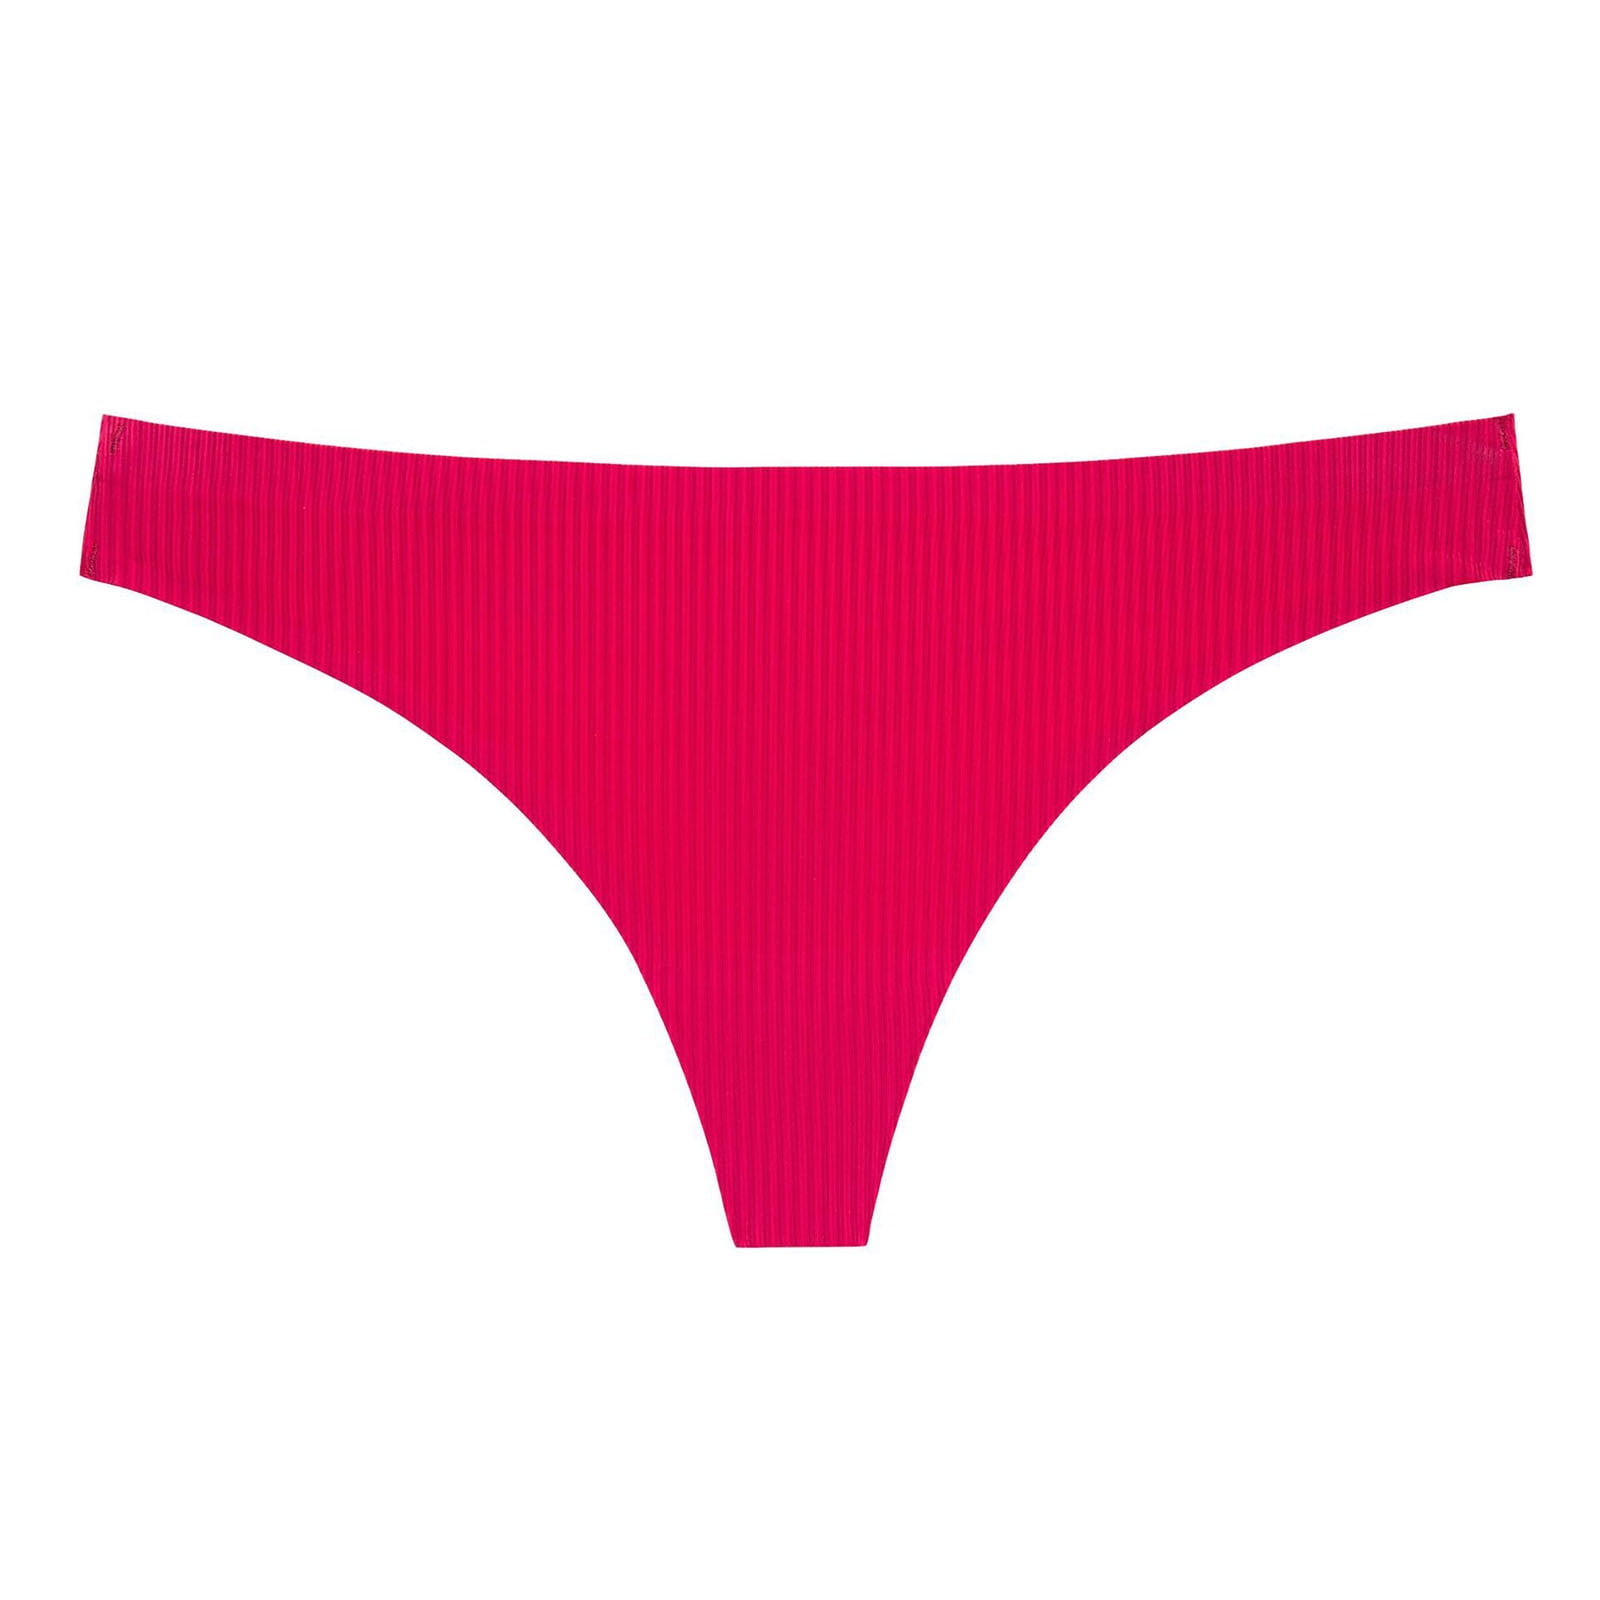 Efsteb Panties for Women Cotton Underwear Solid Color Briefs